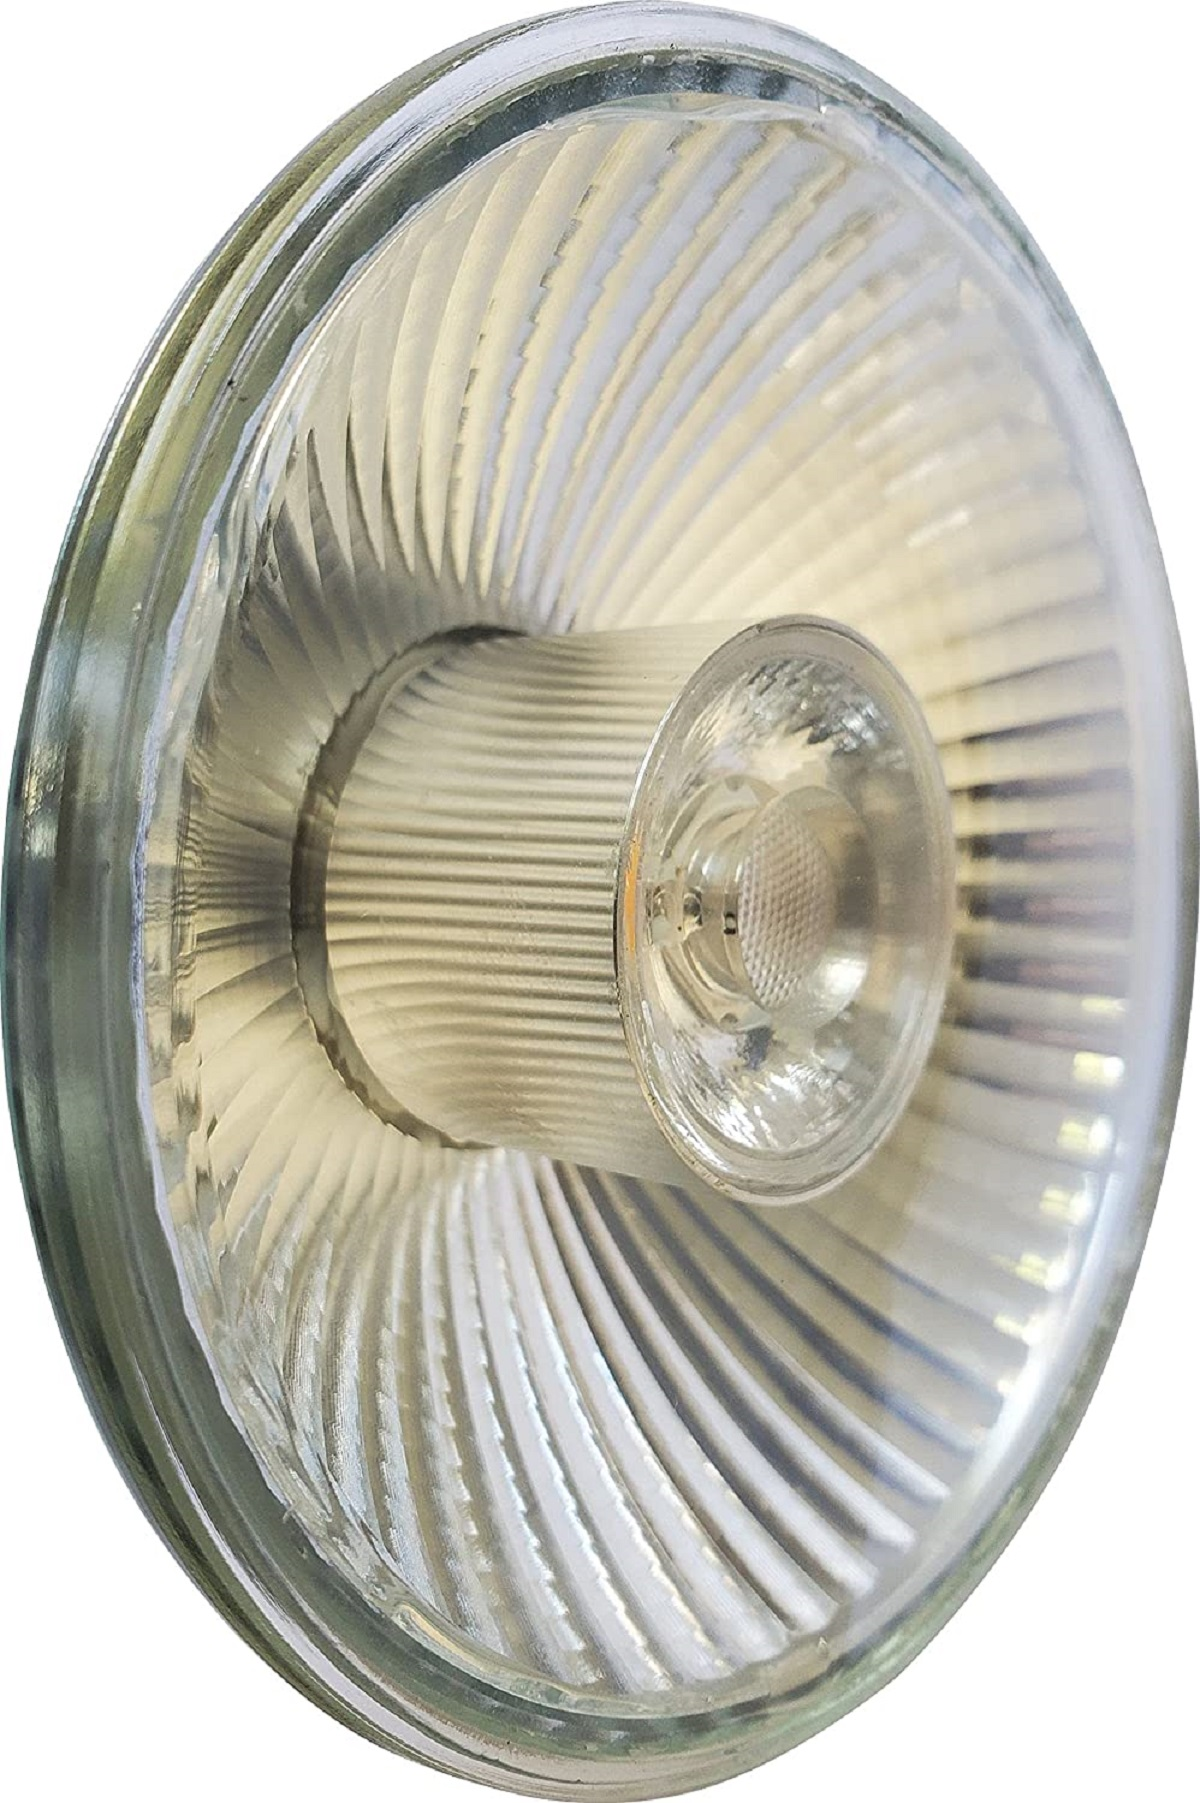 LED Lumen GU10 Weiß Warm 425 Quinn Lampe BOLD Reflektor DIE LED